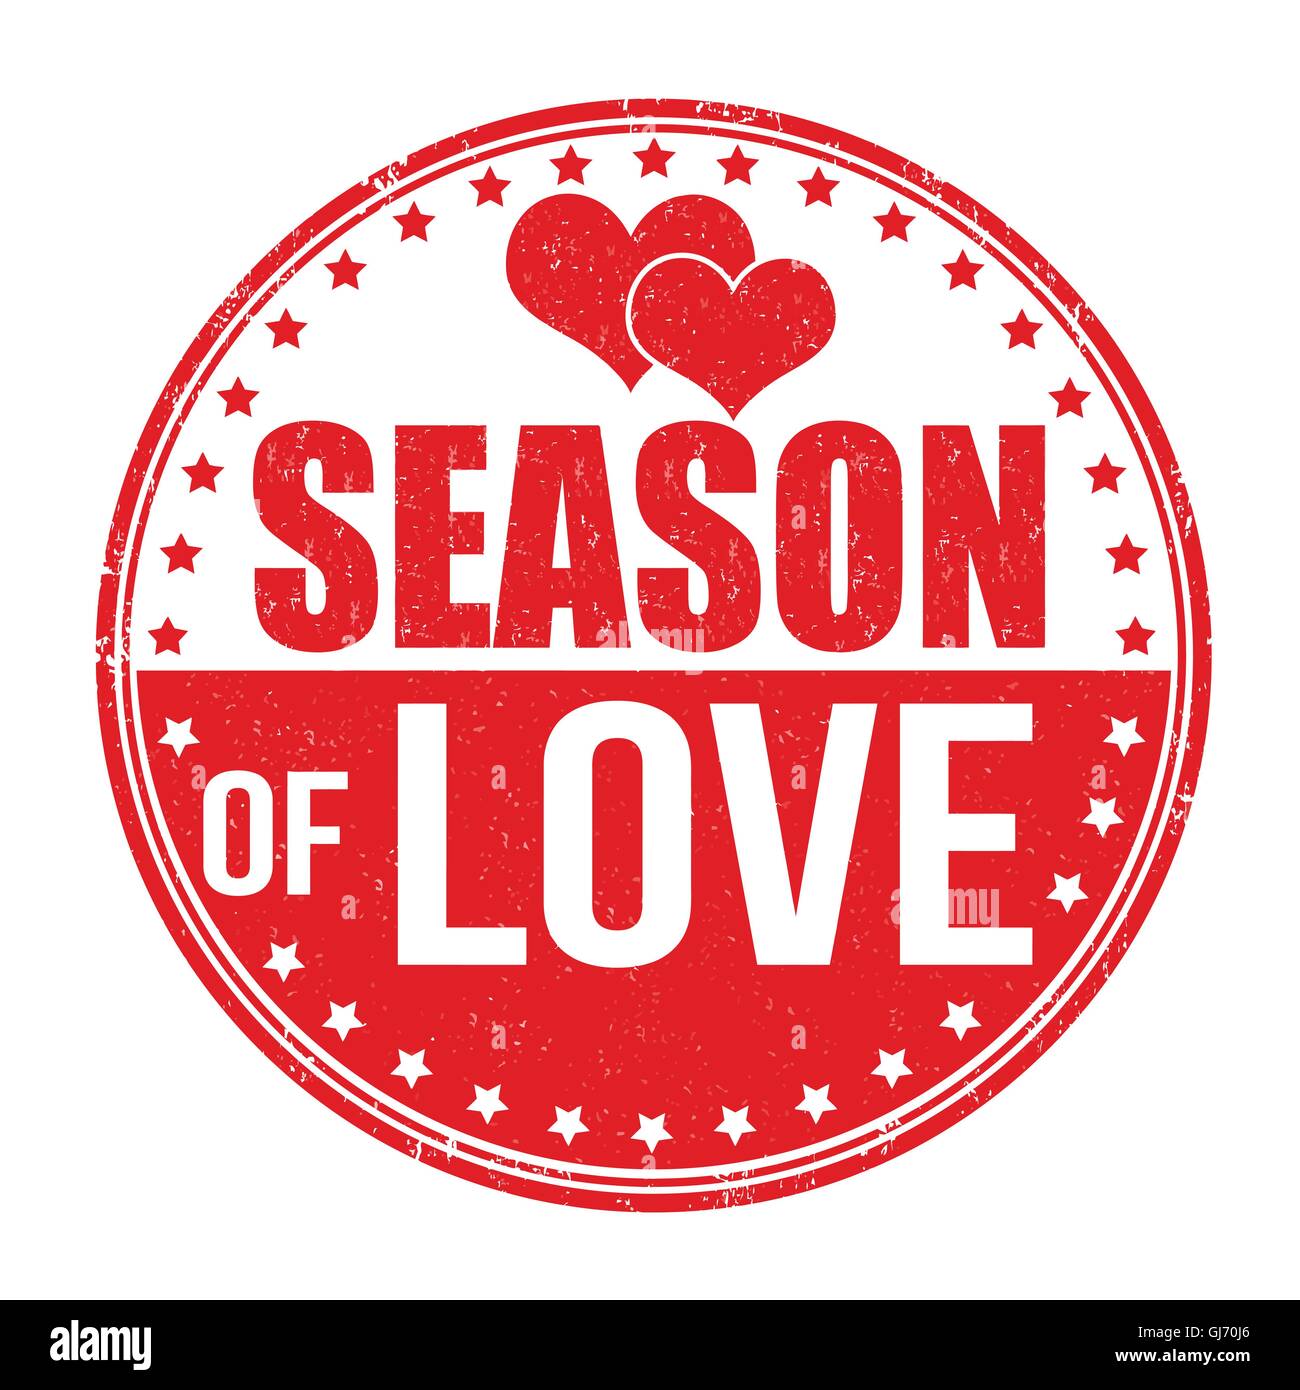 Season of love stamp Stock Vector